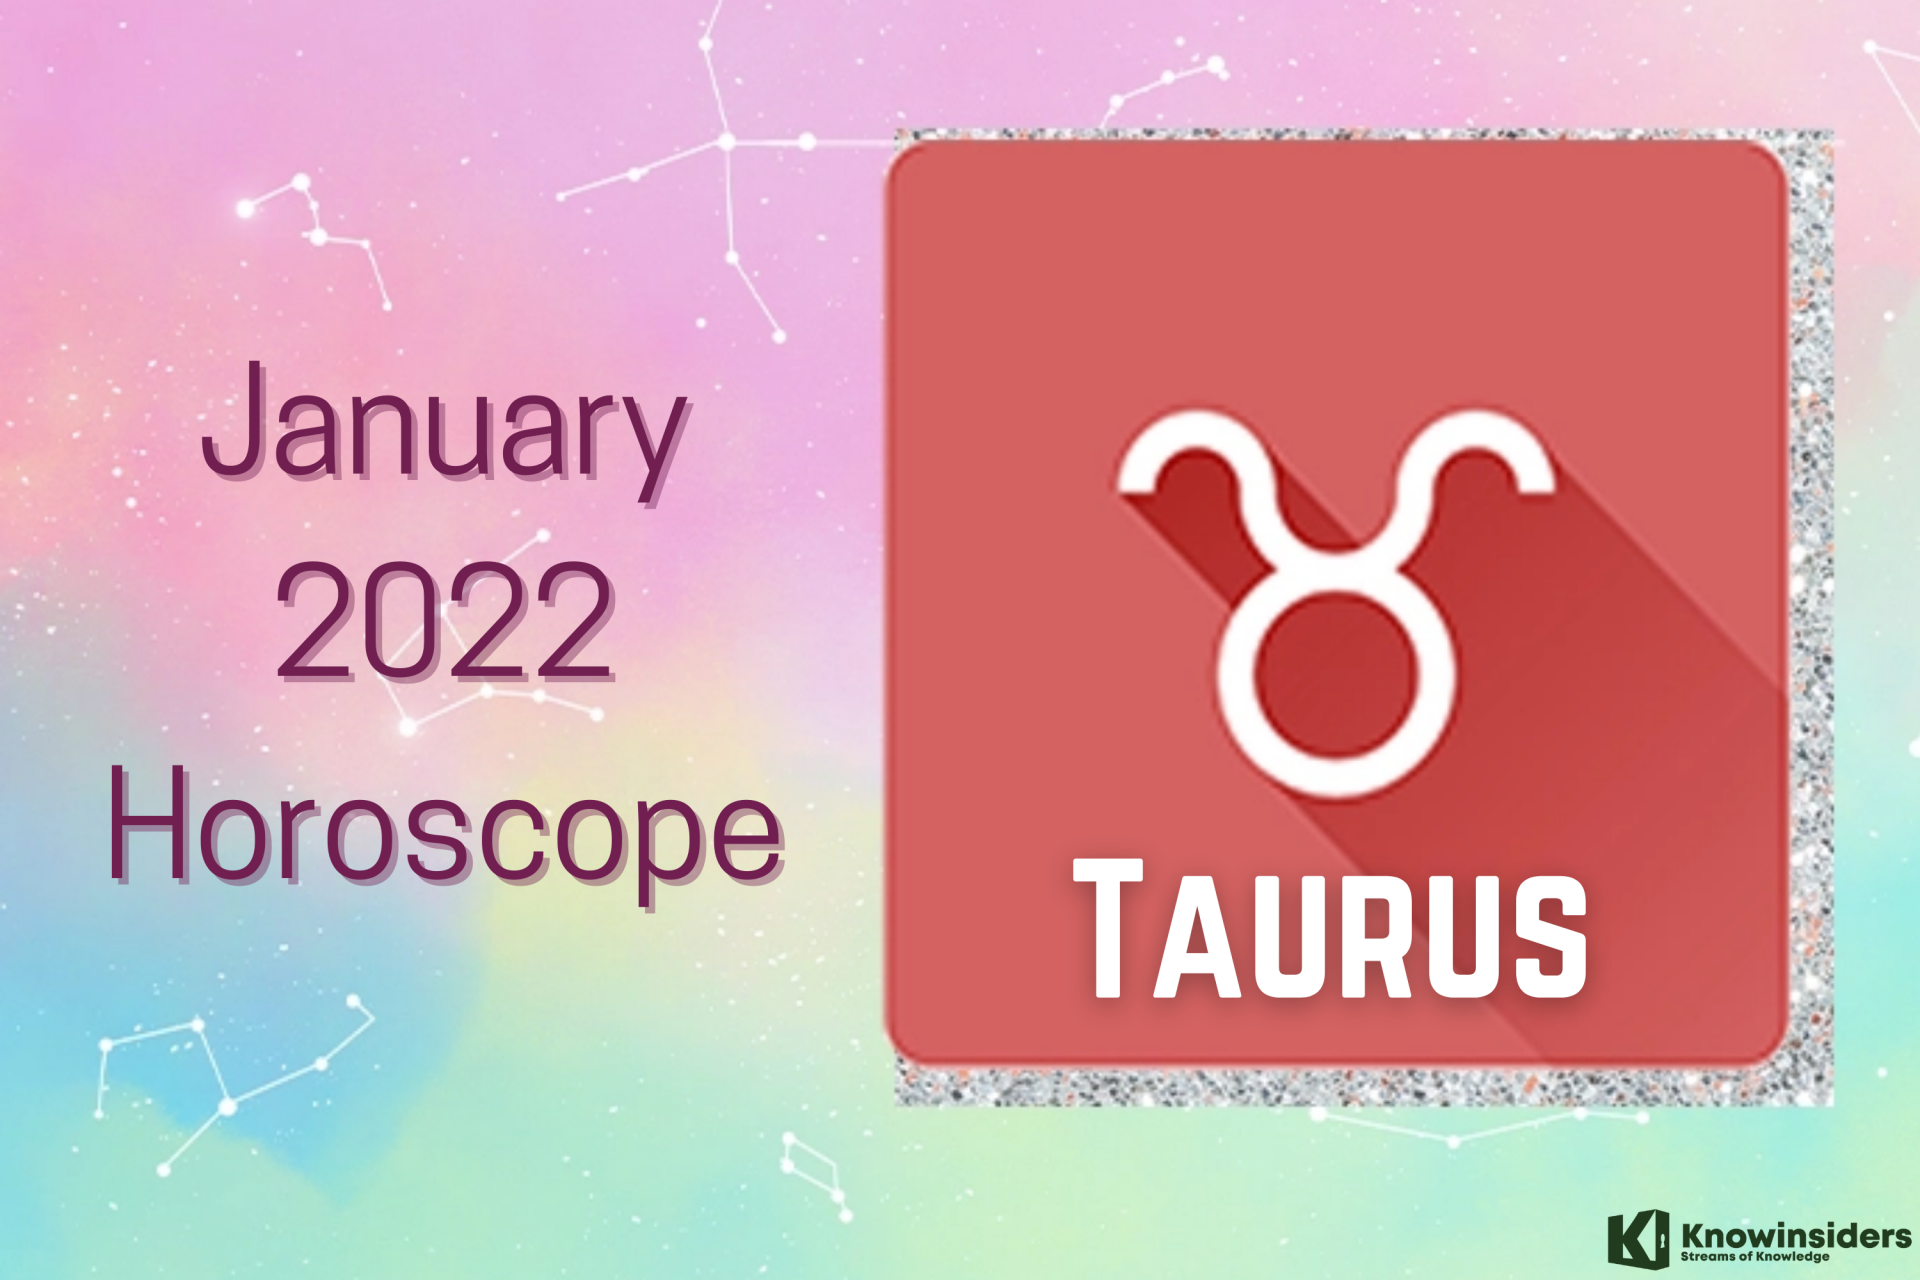 TAURUS January 2022 Horoscope: Prediction for Love, Career, Money and Health